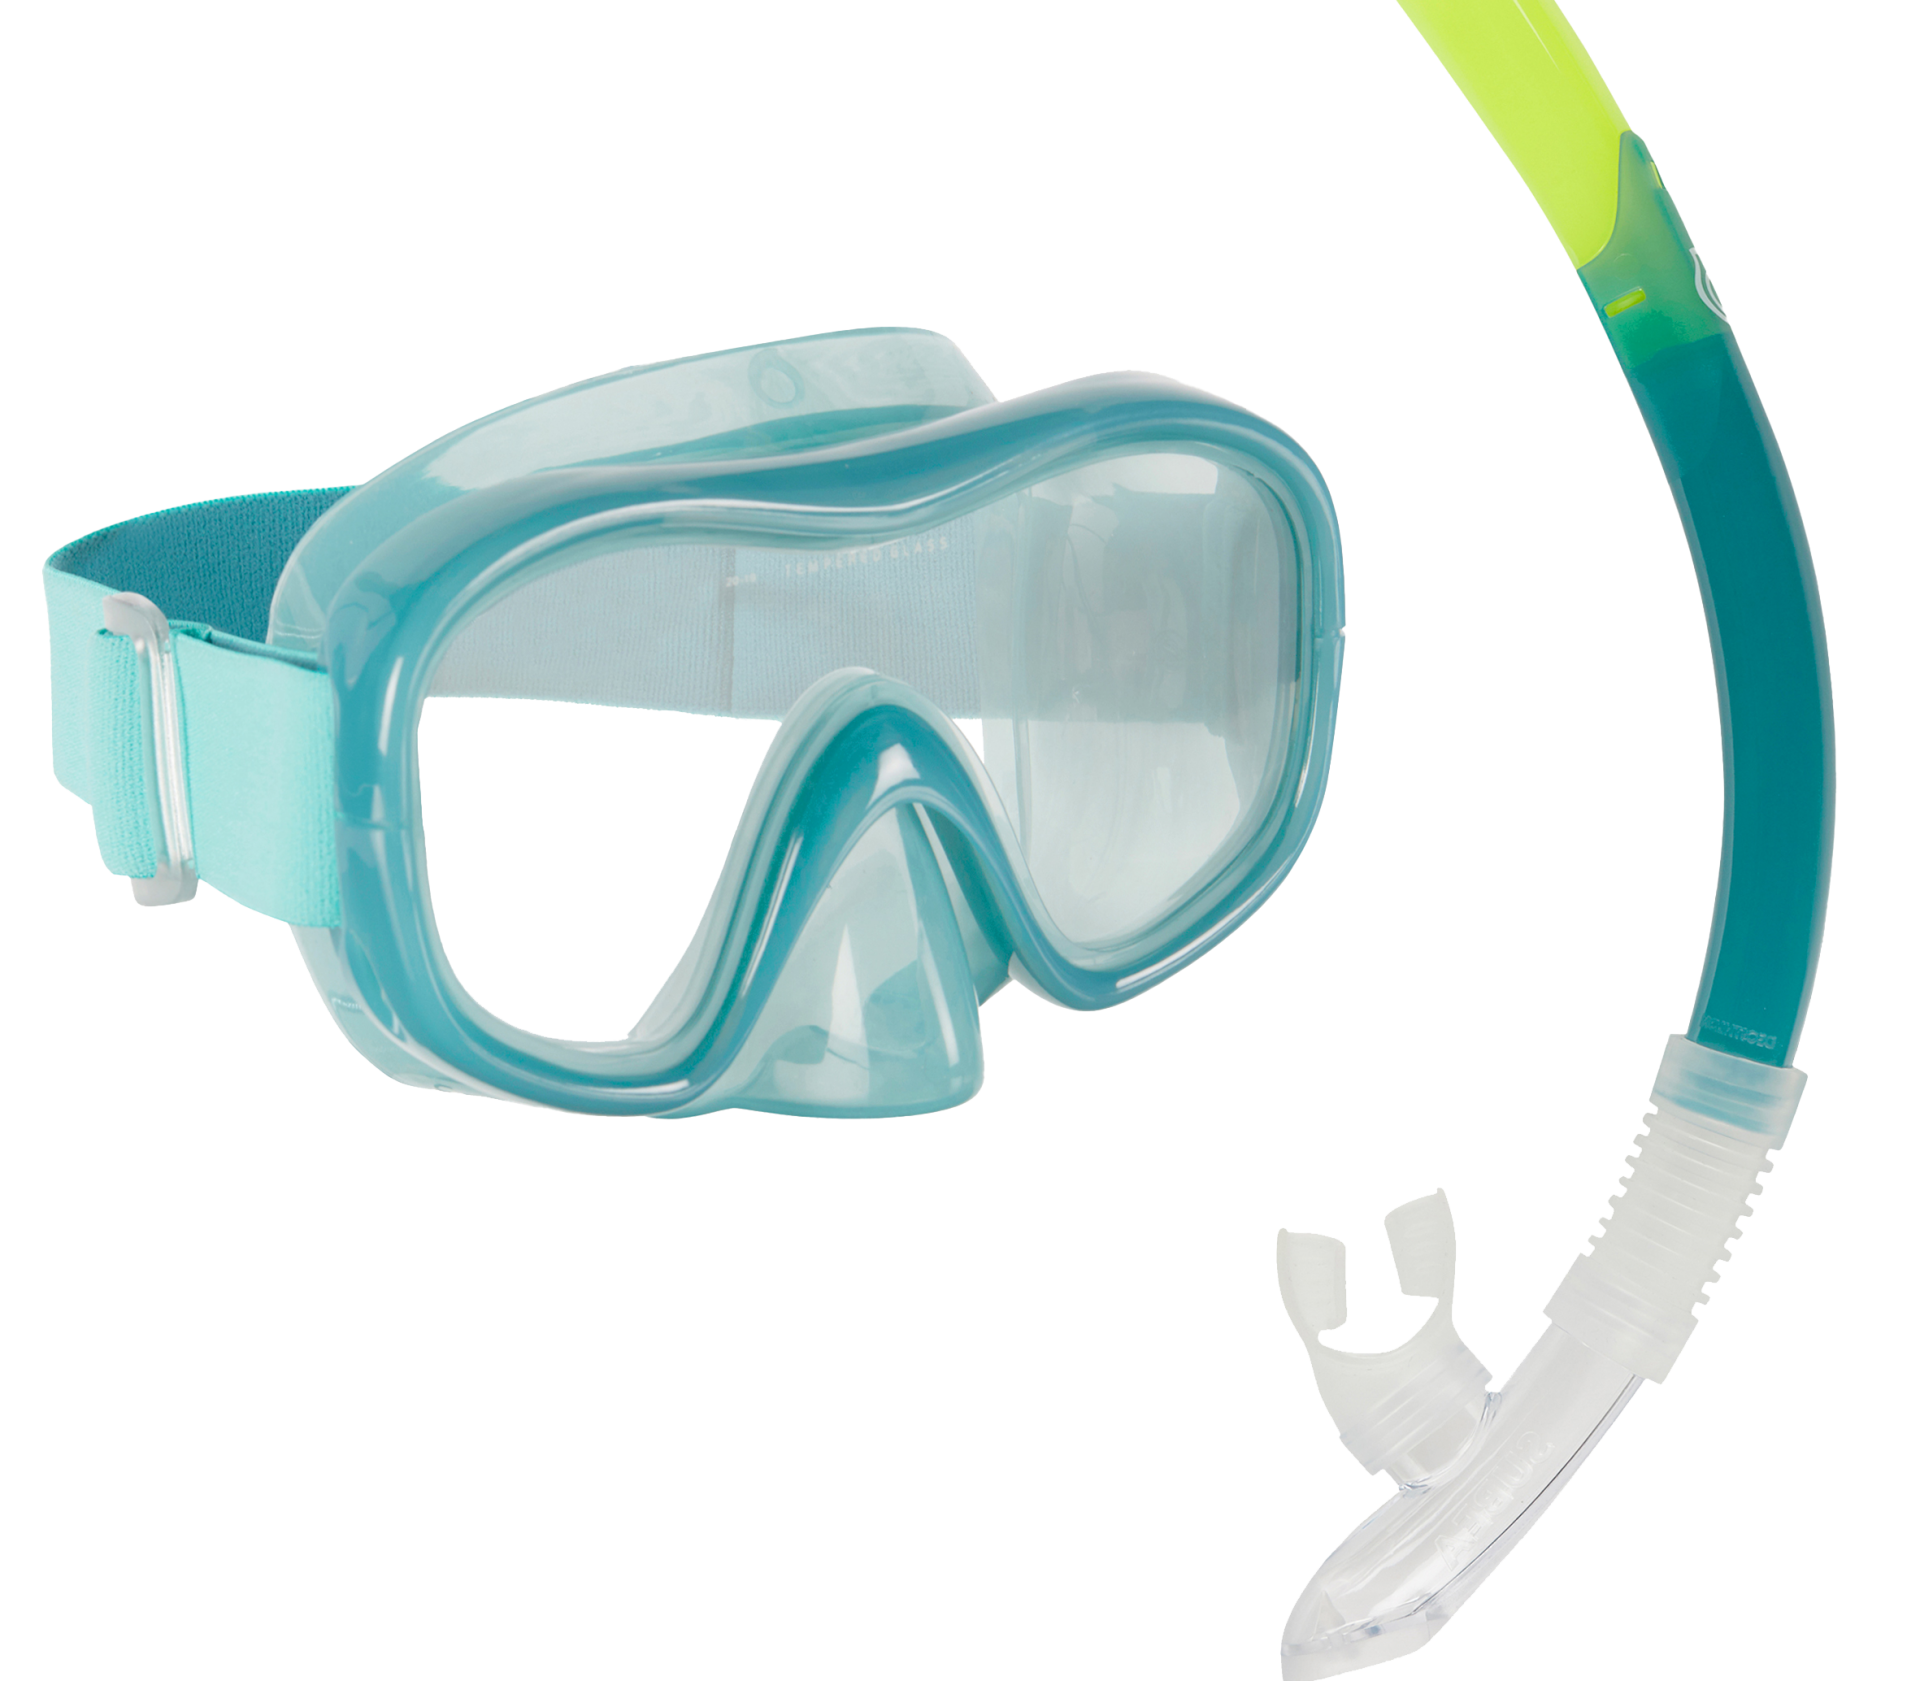 O conjunto de snorkeling com máscara e tubo